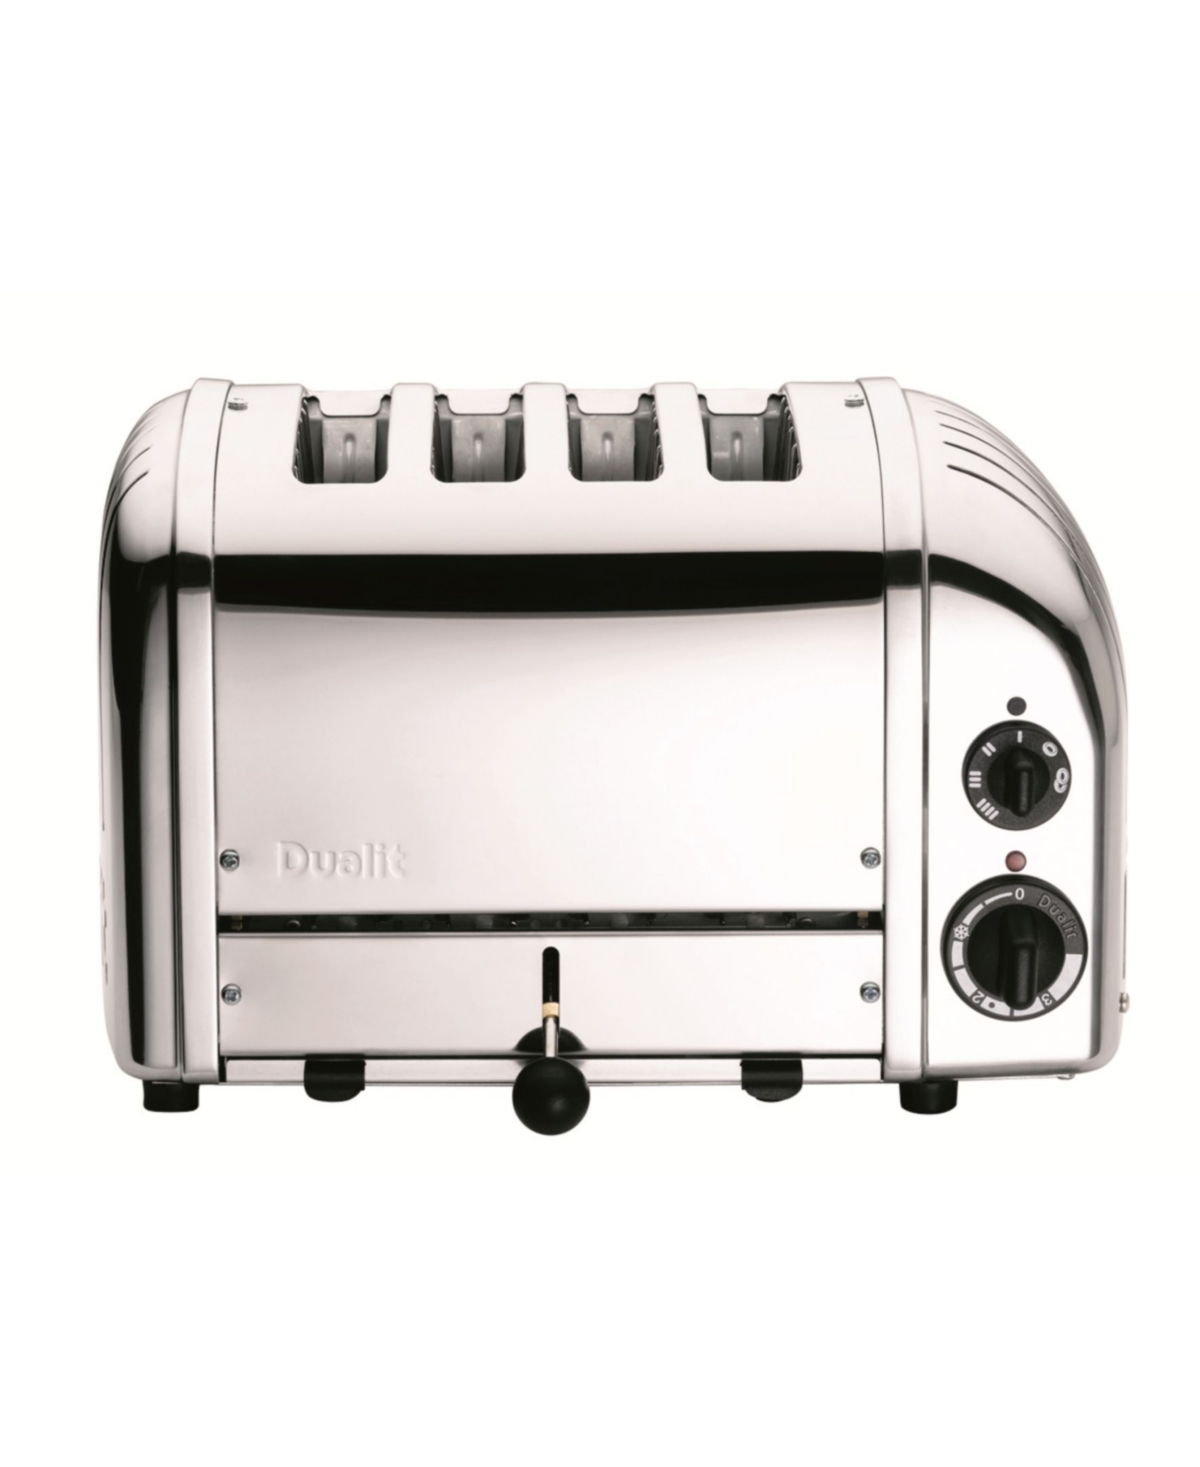 Dualit 4 Slice NewGen Toaster